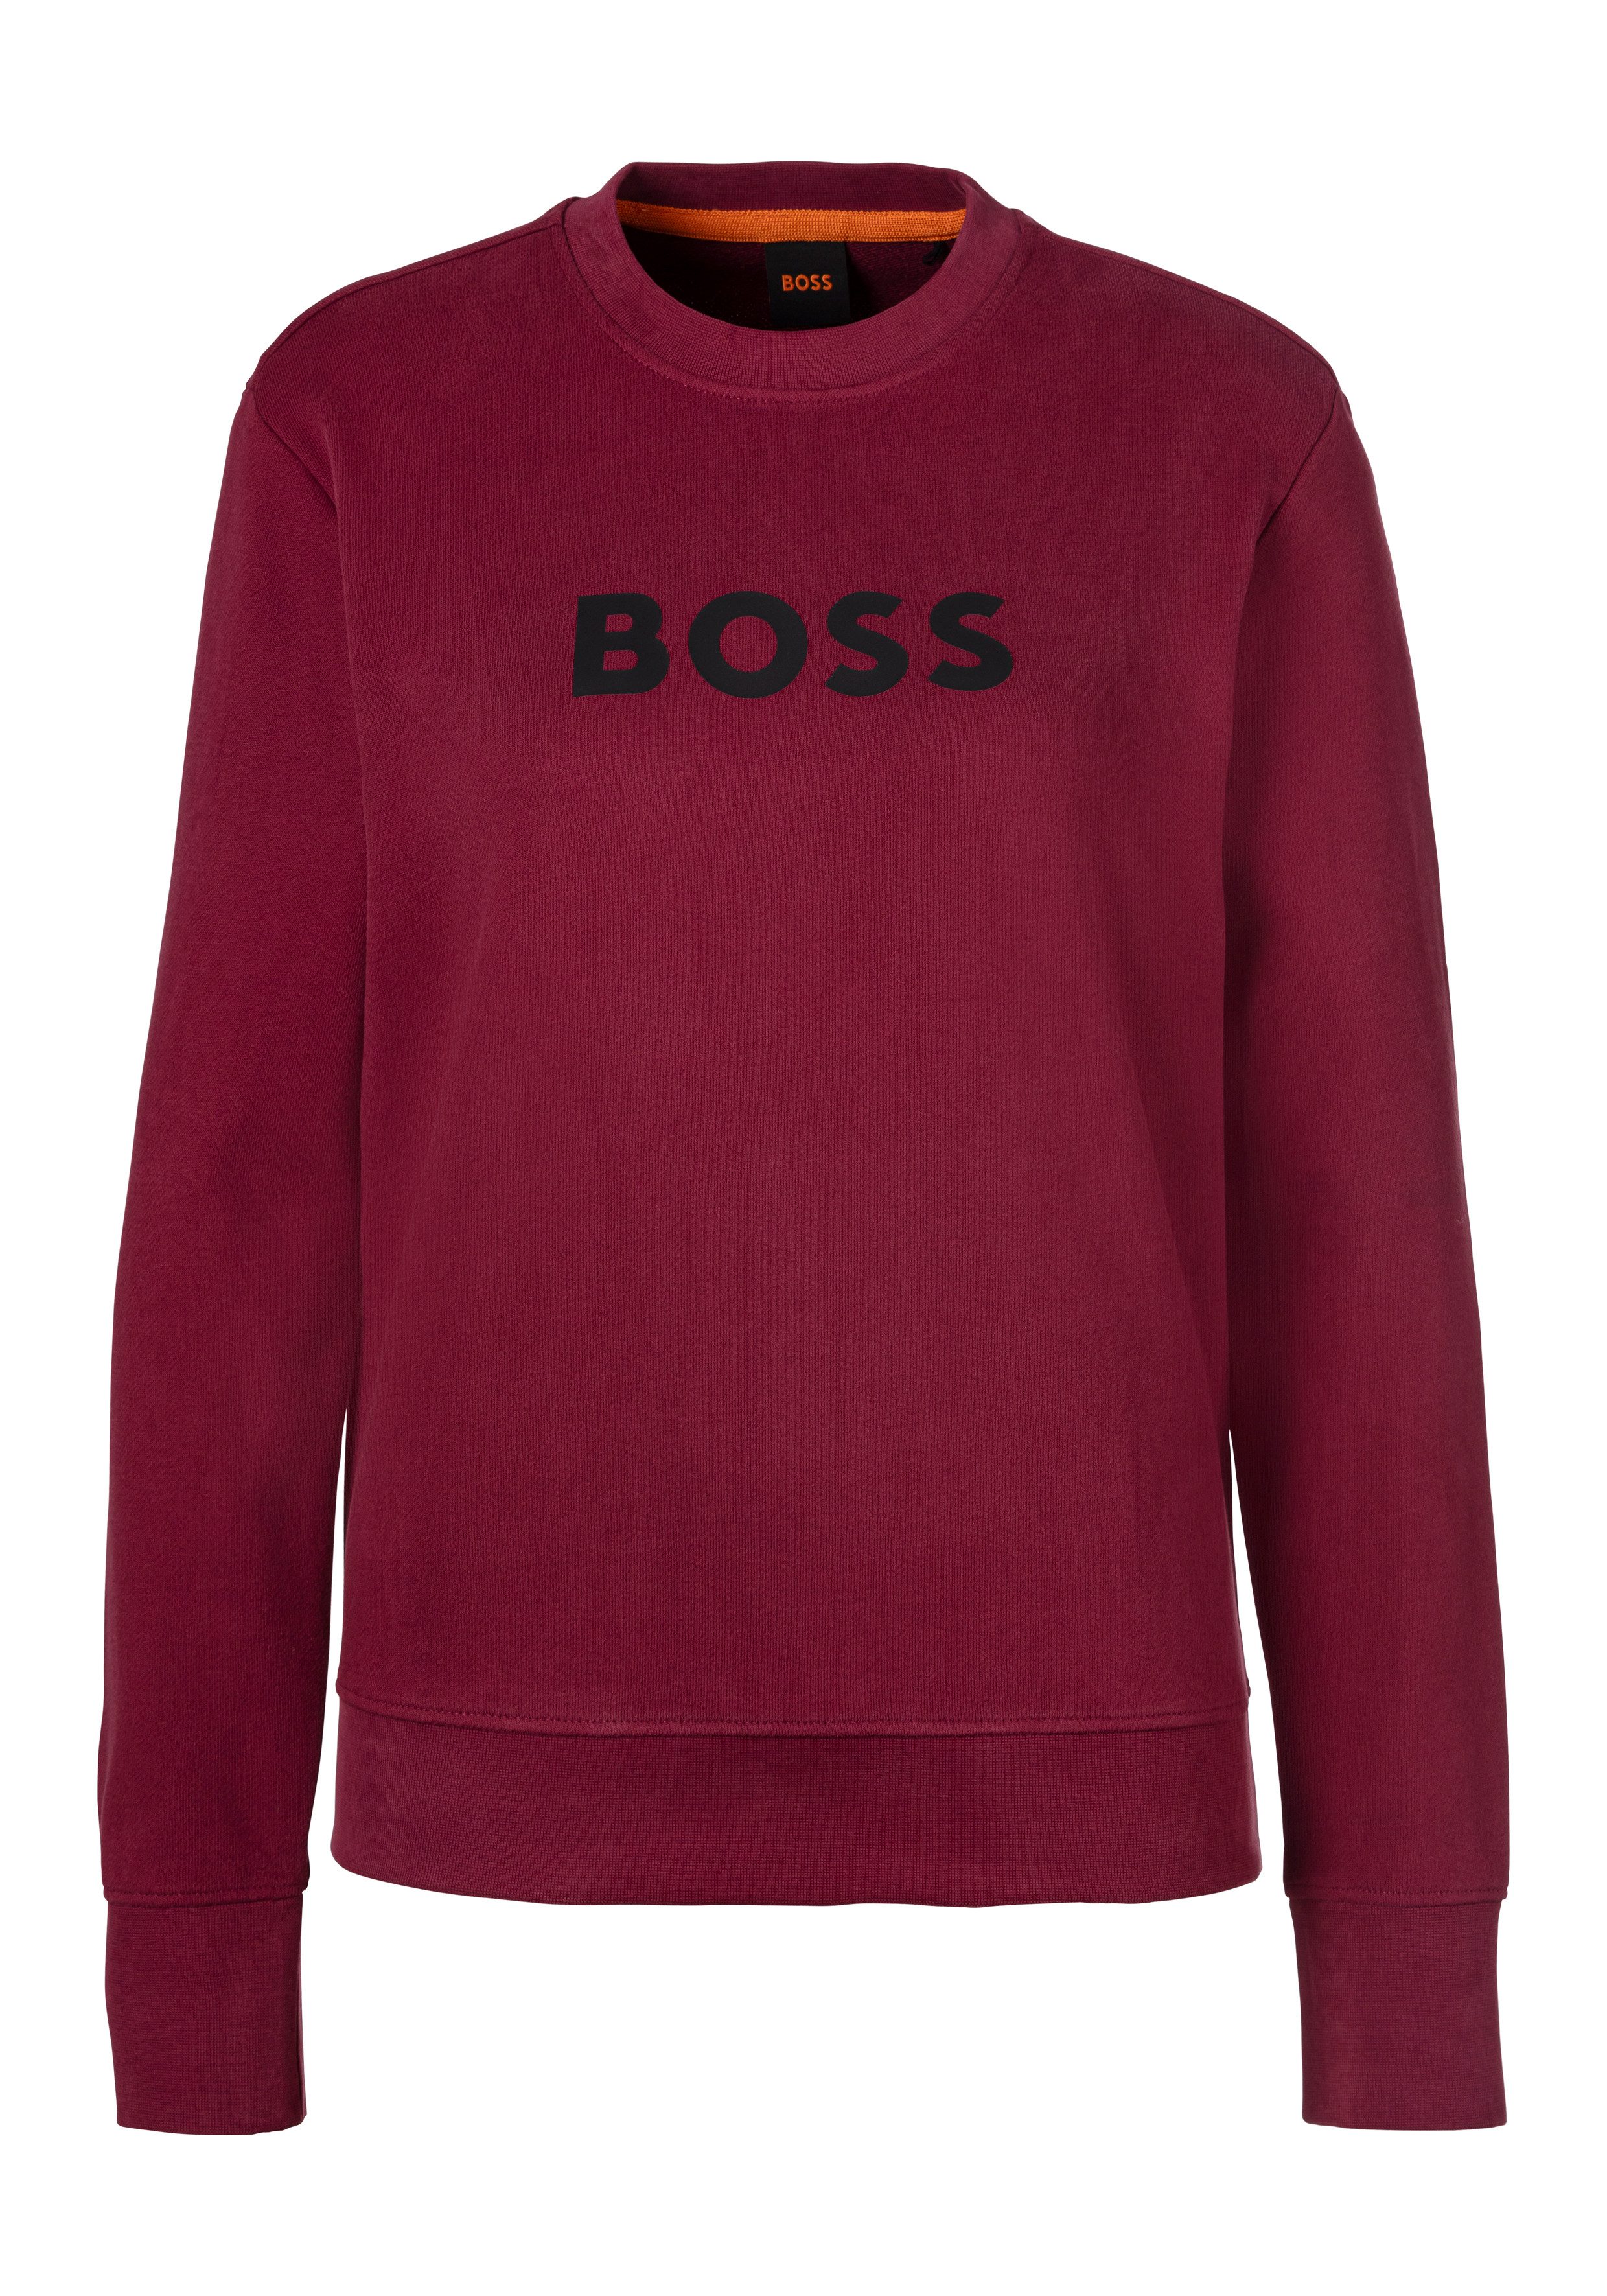 BOSS ORANGE Sweatshirt C_Elaboss_6 Premium Damenmode mit Rundhalsausschnitt